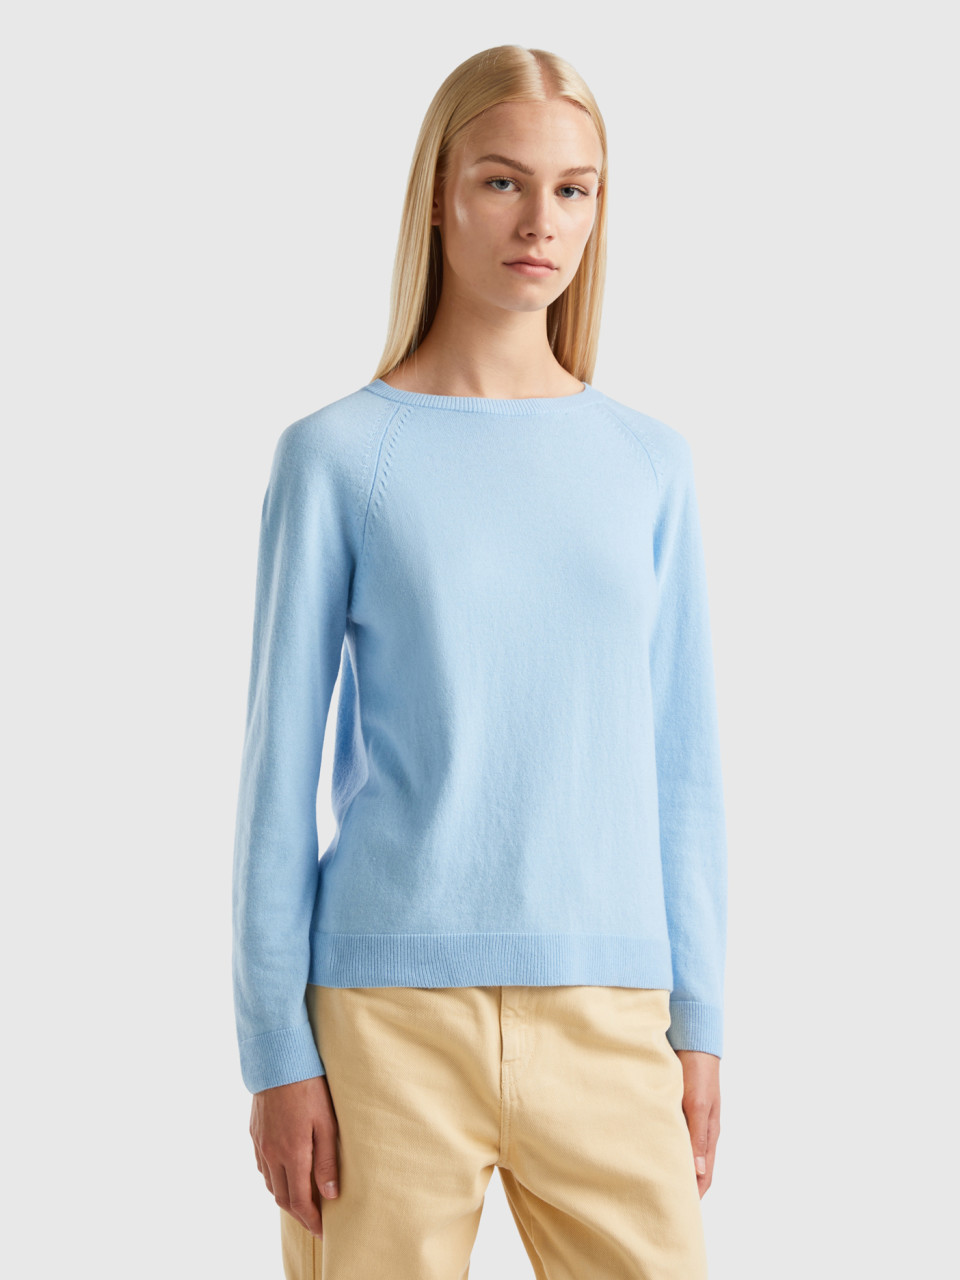 Benetton, Light Blue Crew Neck Sweater In Cashmere And Wool Blend, Light Blue, Women